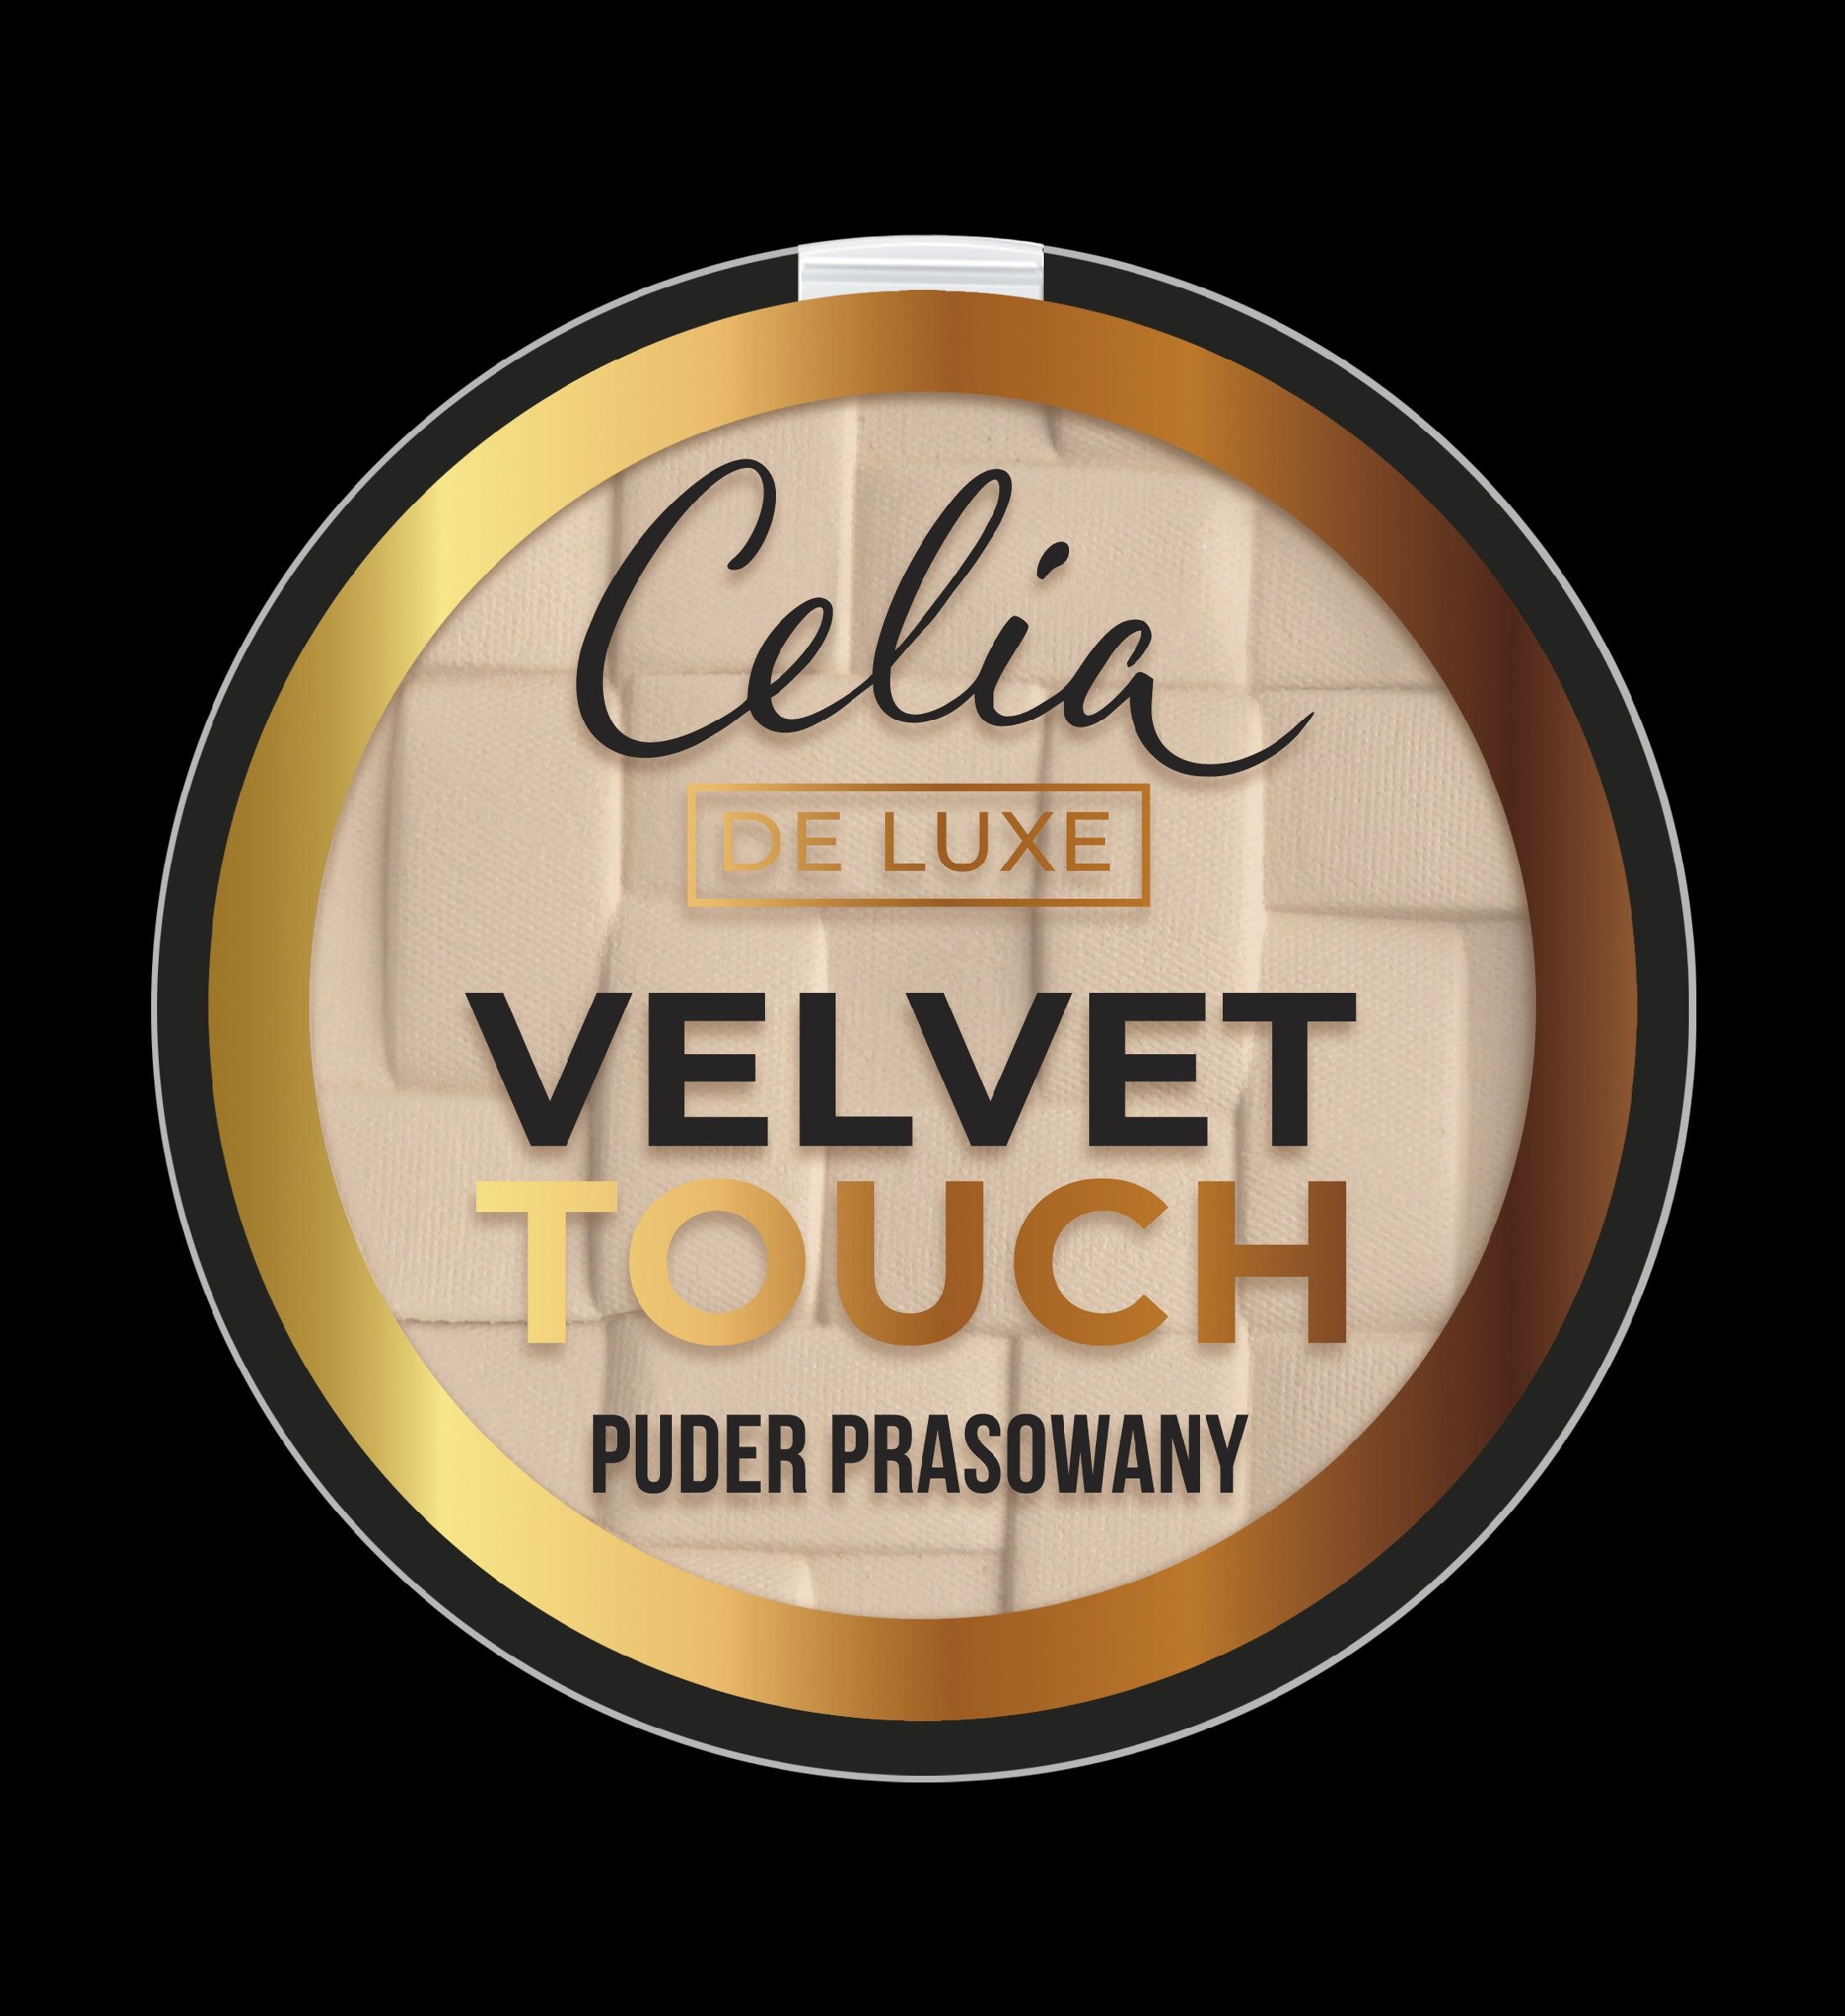 Celia Velvet Touch Puder w kamieniu nr. 102 Natural Beige 9g 075155 (5900525065155)